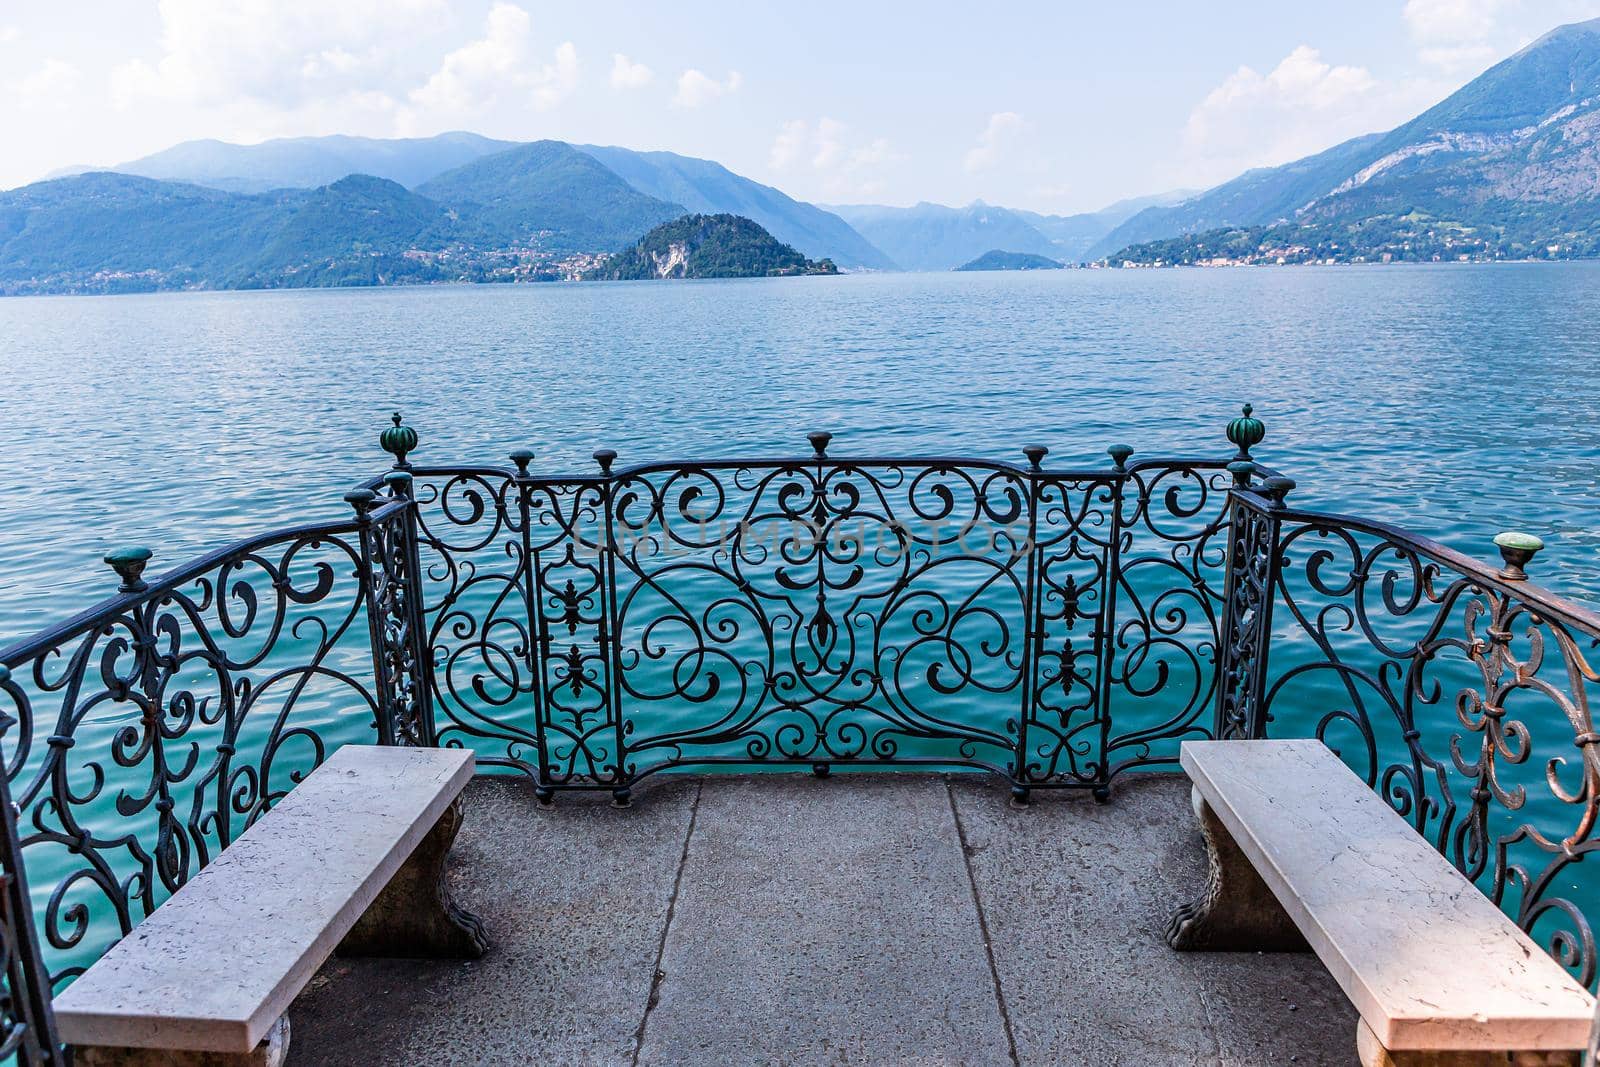  lake Como, near Bellagio, piedmonte, italy by photogolfer